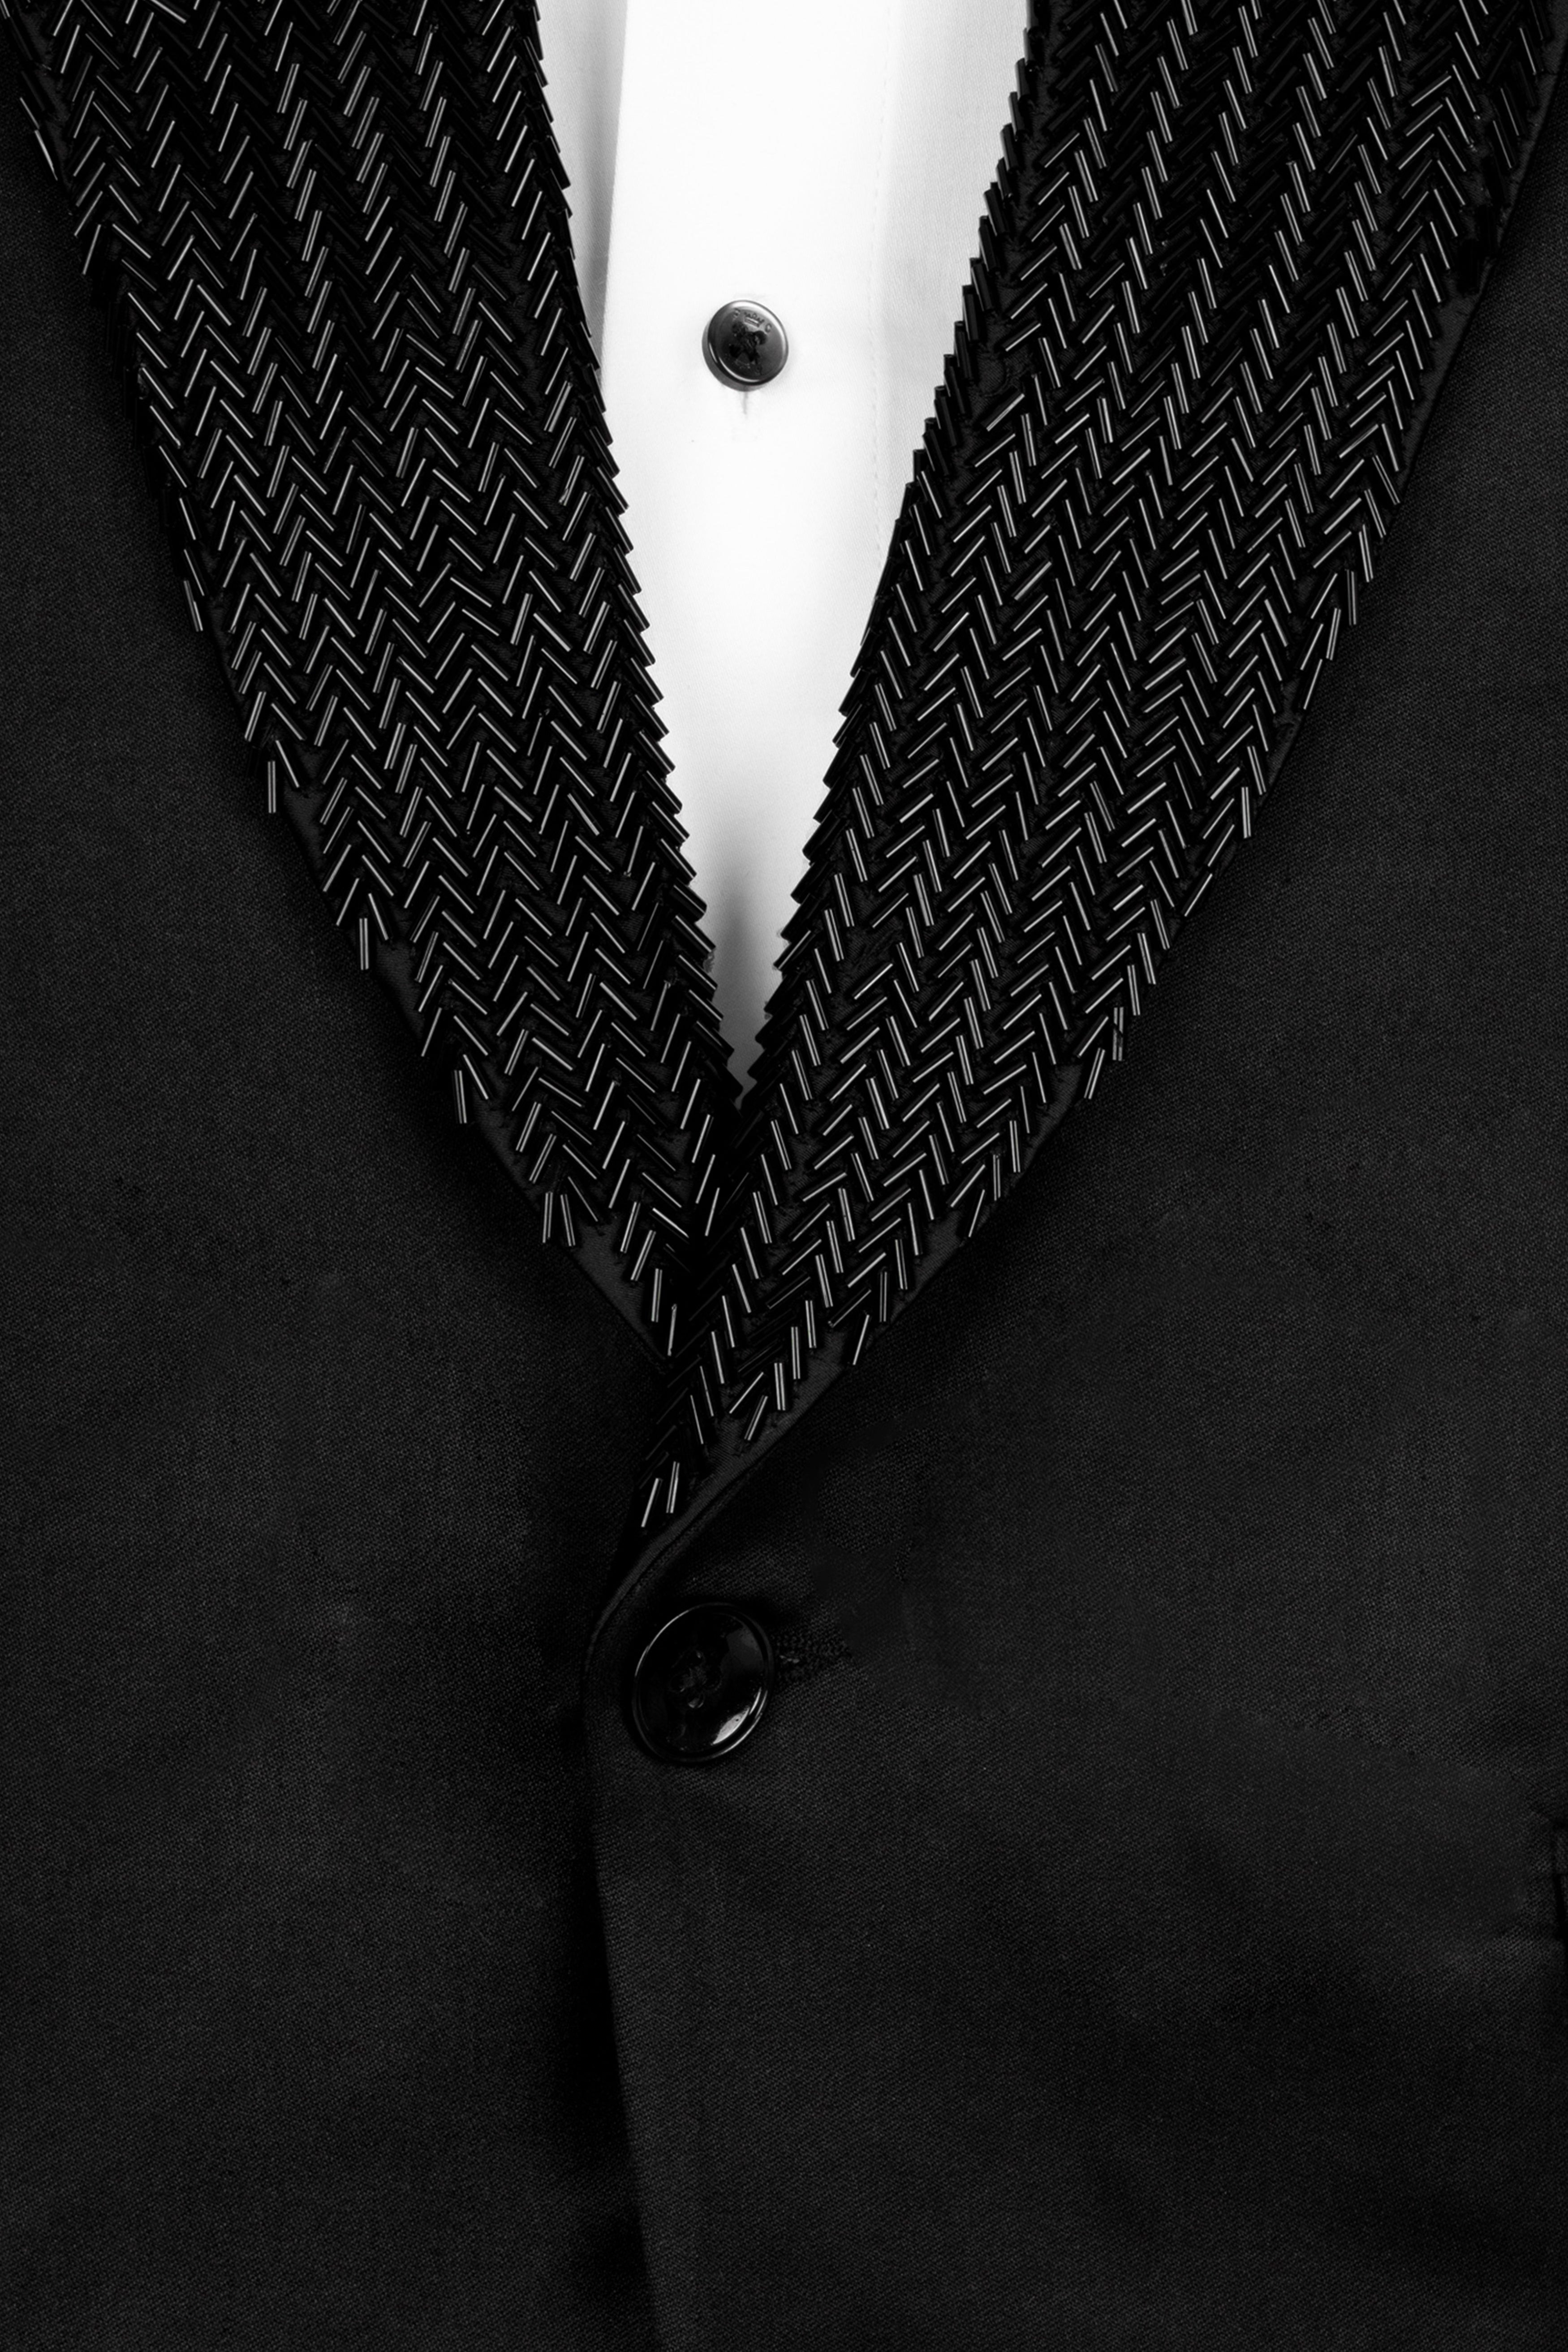 Jade Black Subtle Sheen Wool Rich Hand Crafted Designer Tuxedo Suit